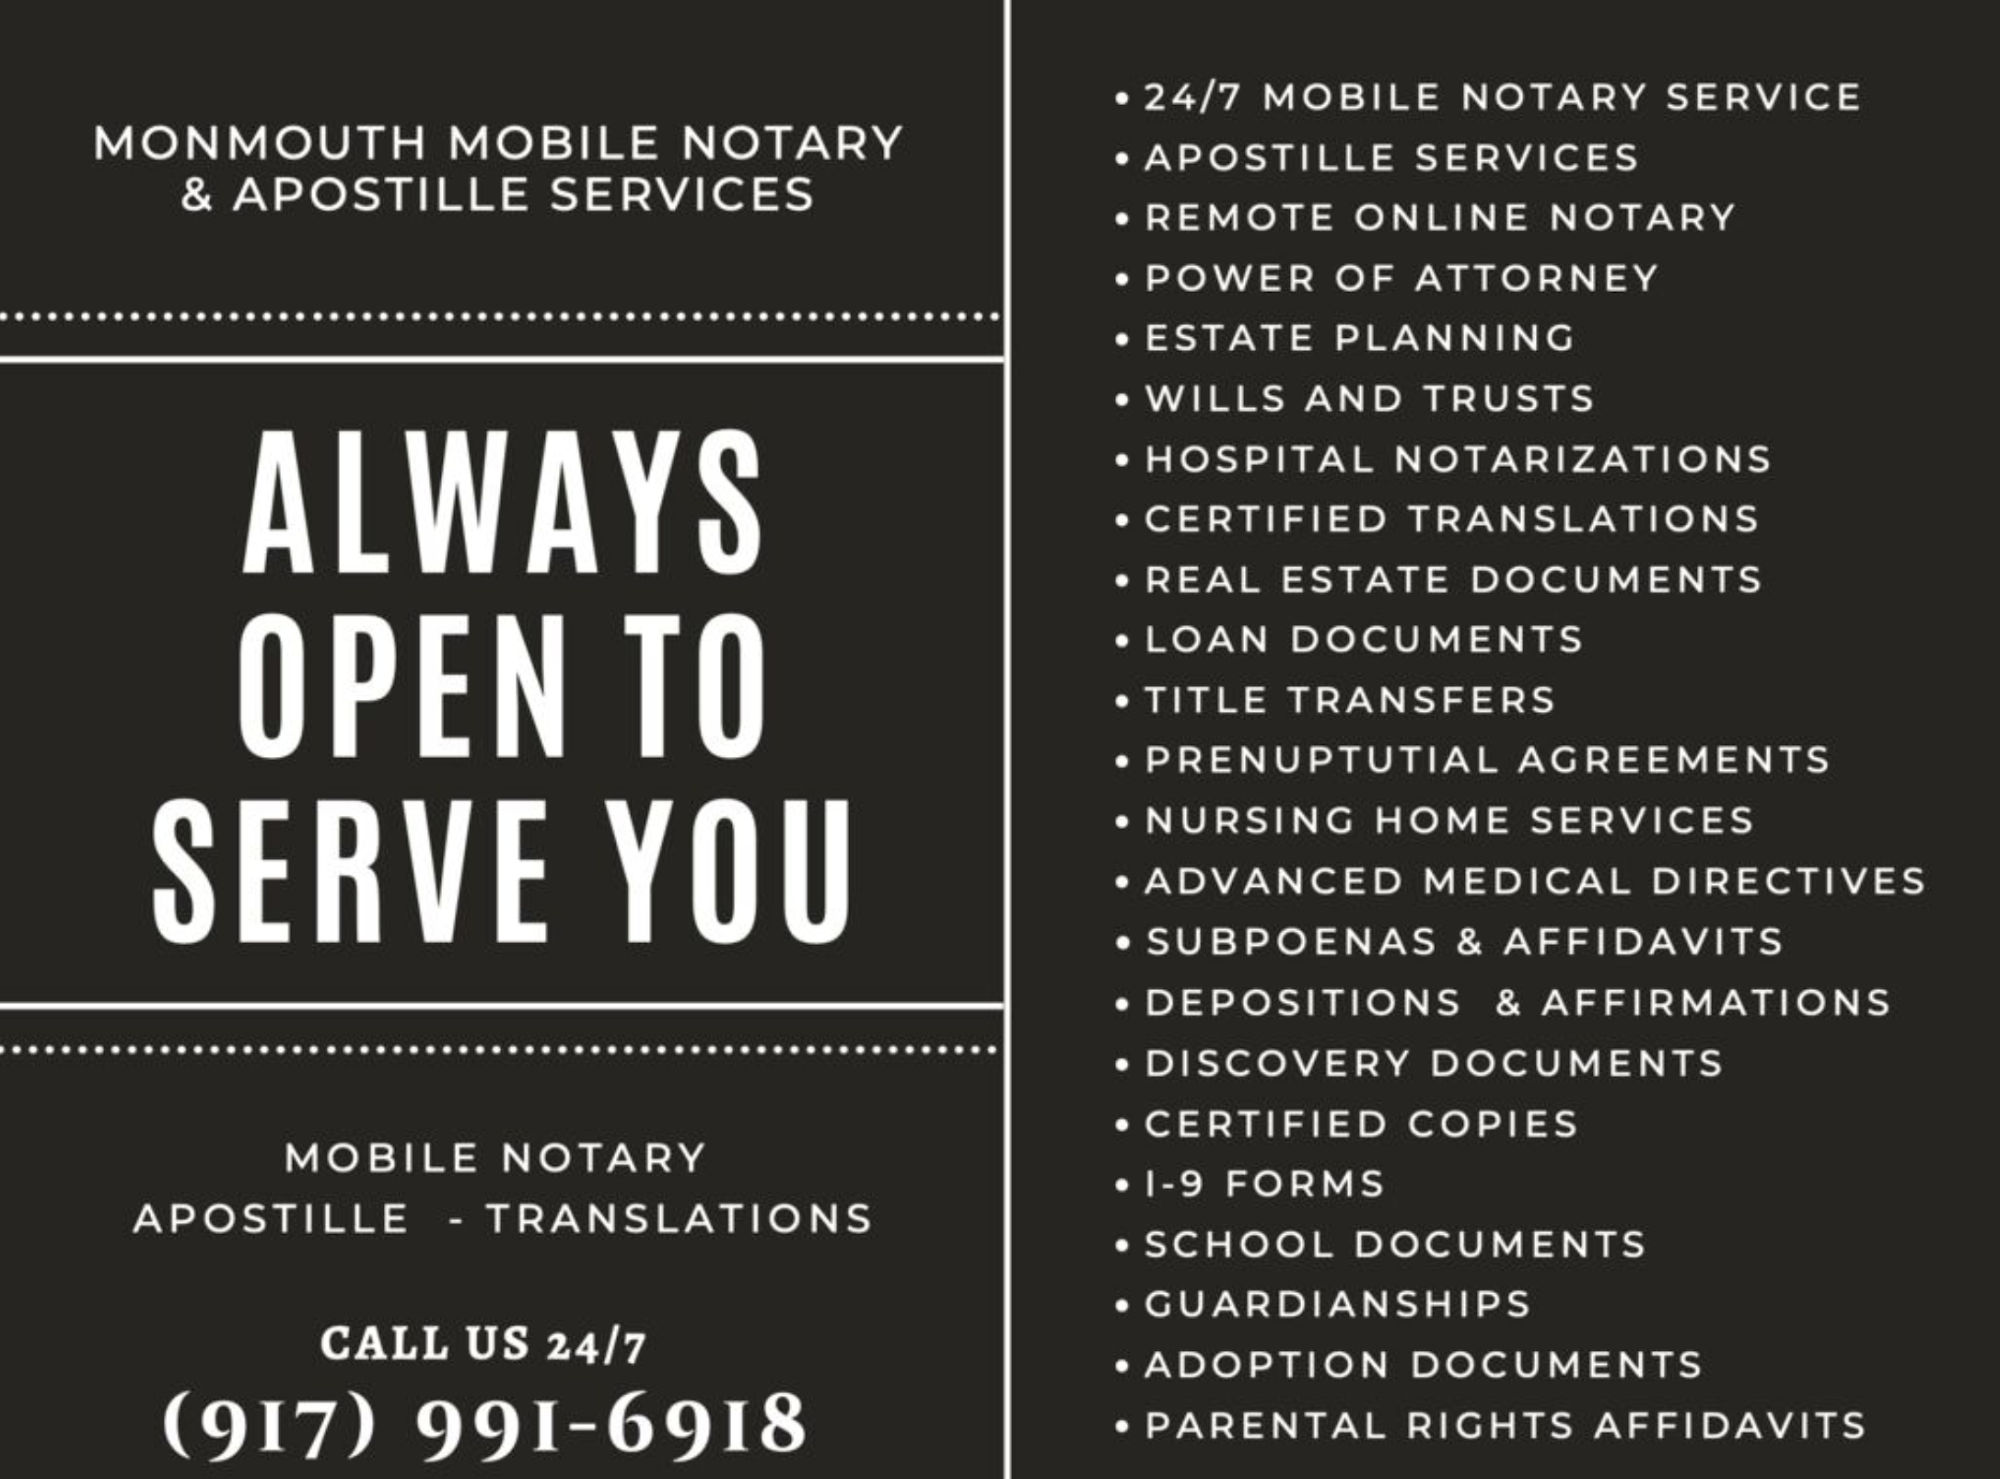 Monmouth Mobile Notary & Apostille Services 23 Tharp Ln, Marlboro New Jersey 07746